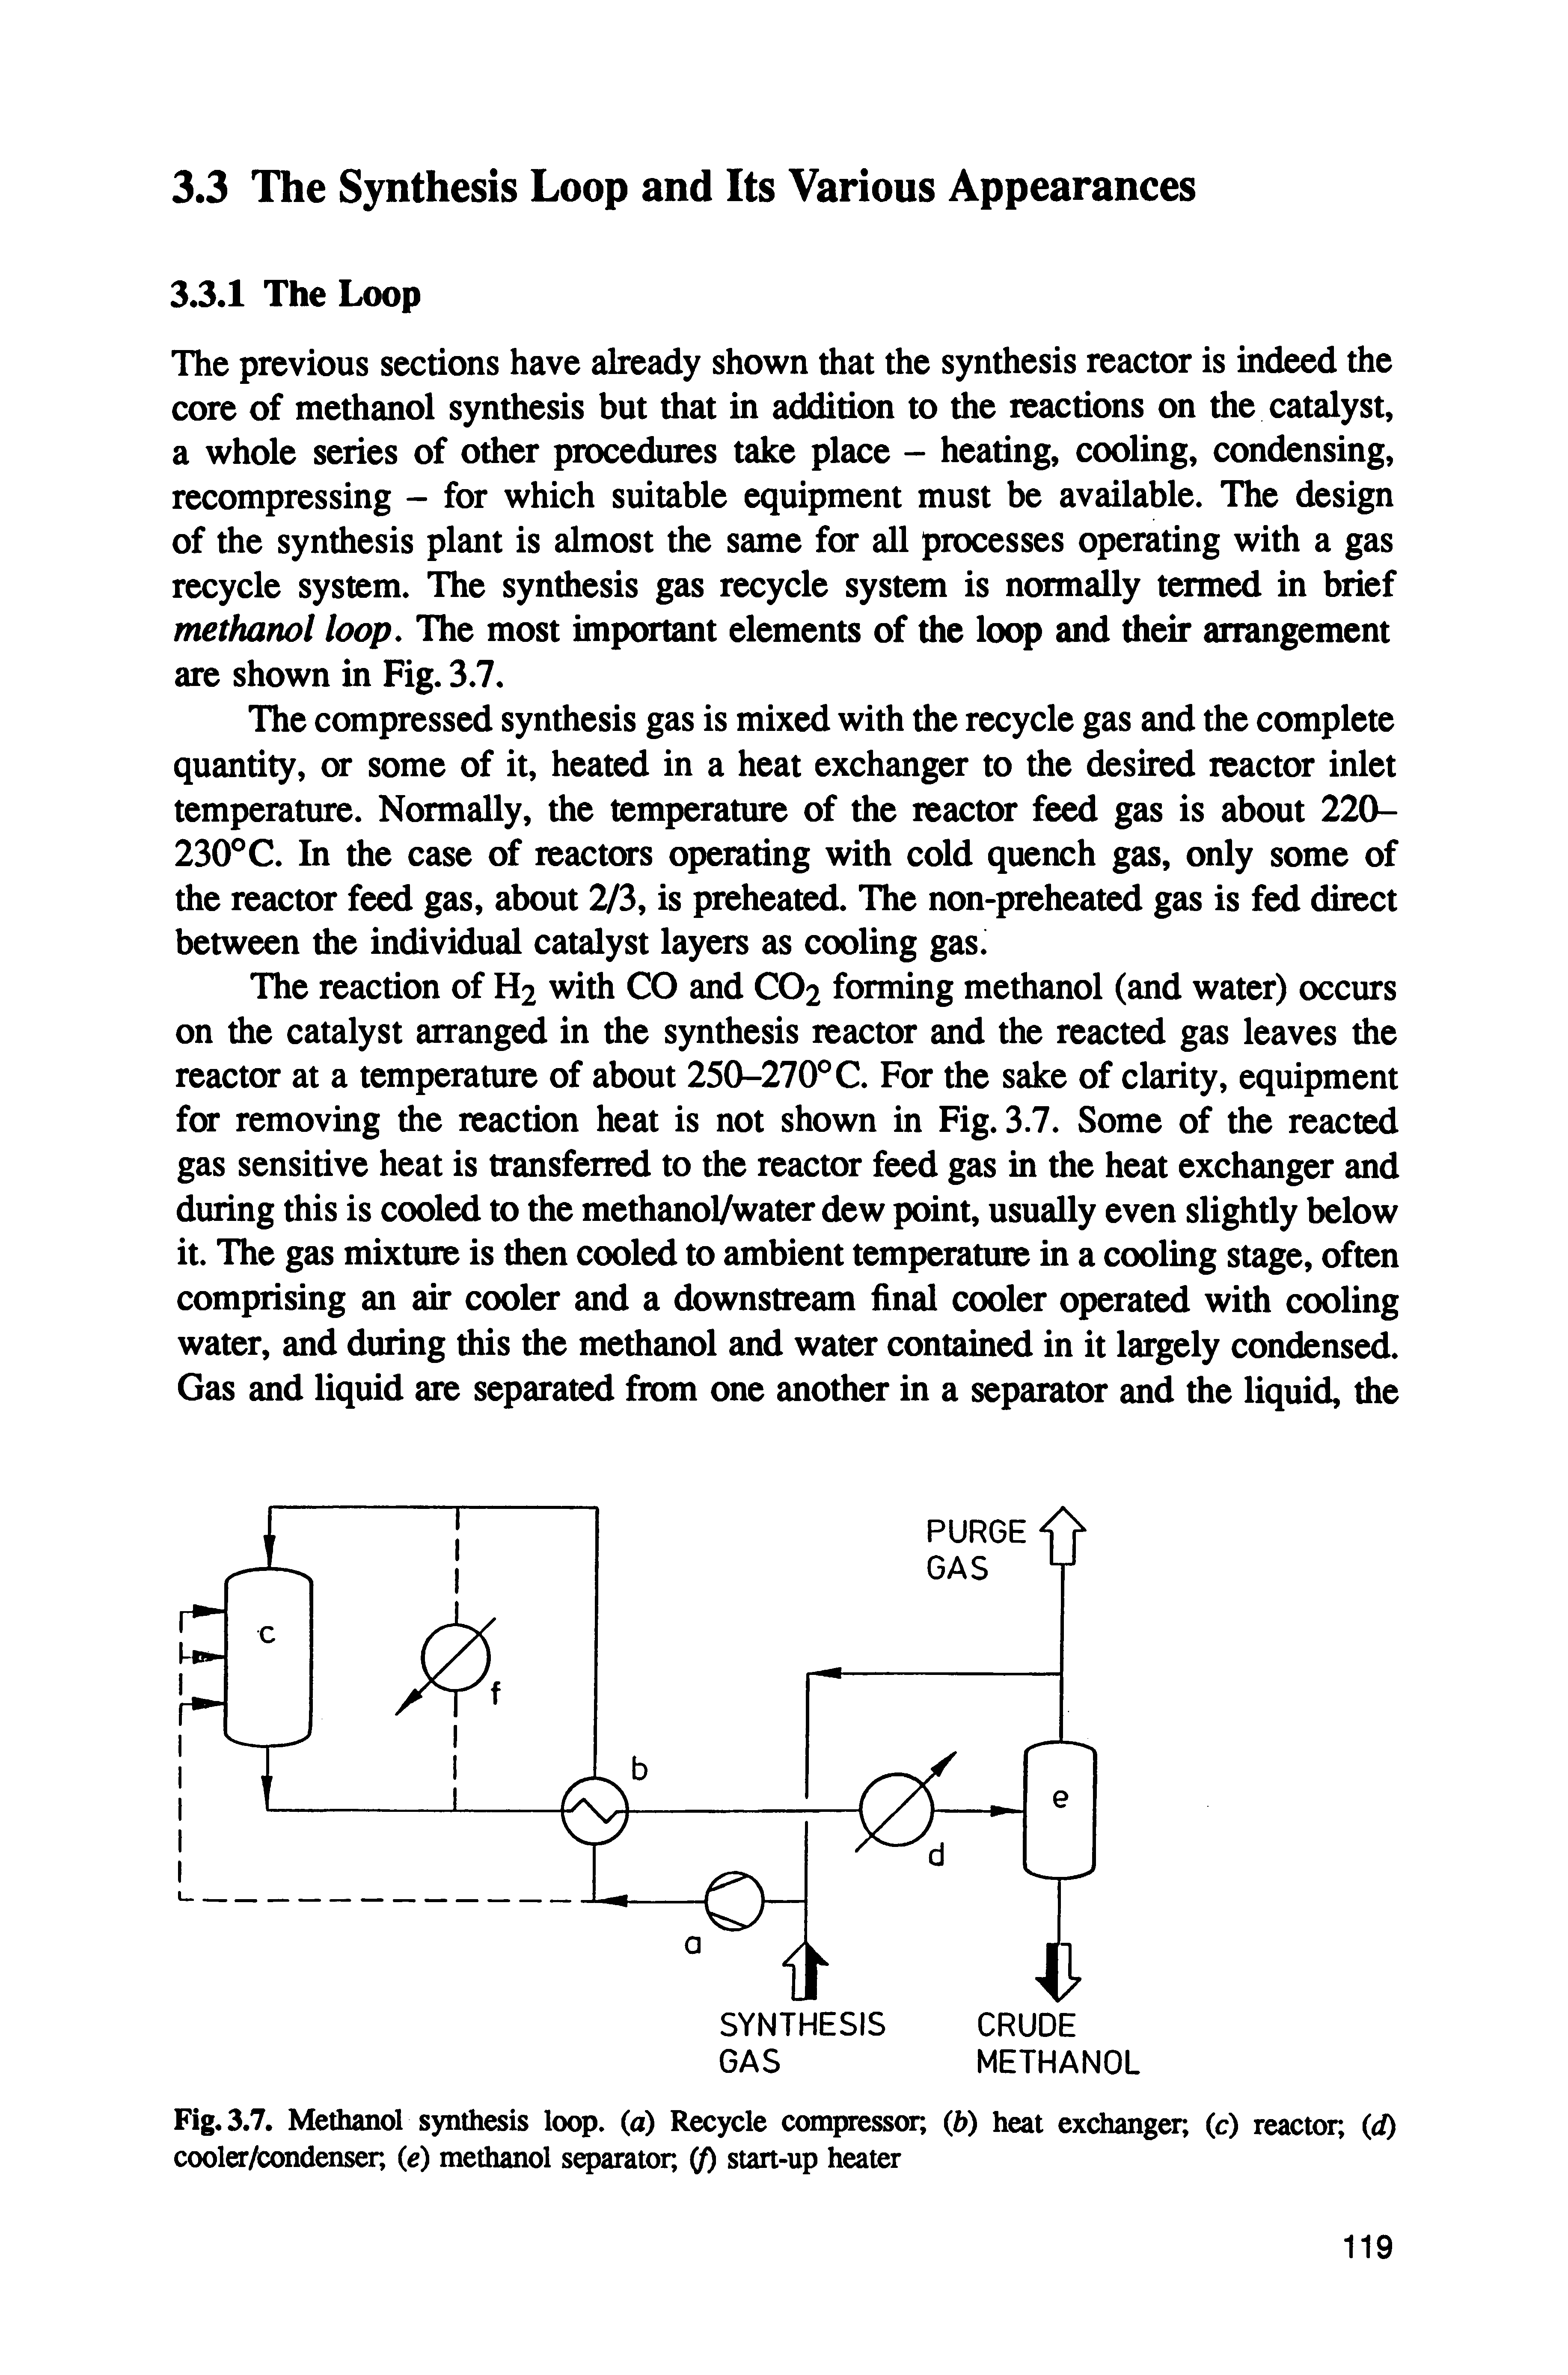 Fig. 3.7. Methanol synthesis loop, (a) Recycle compressor (f>) heat exchanger, (c) reactor, (d) cooler/condenser, (e) methanol separator, (/) start-up heater...